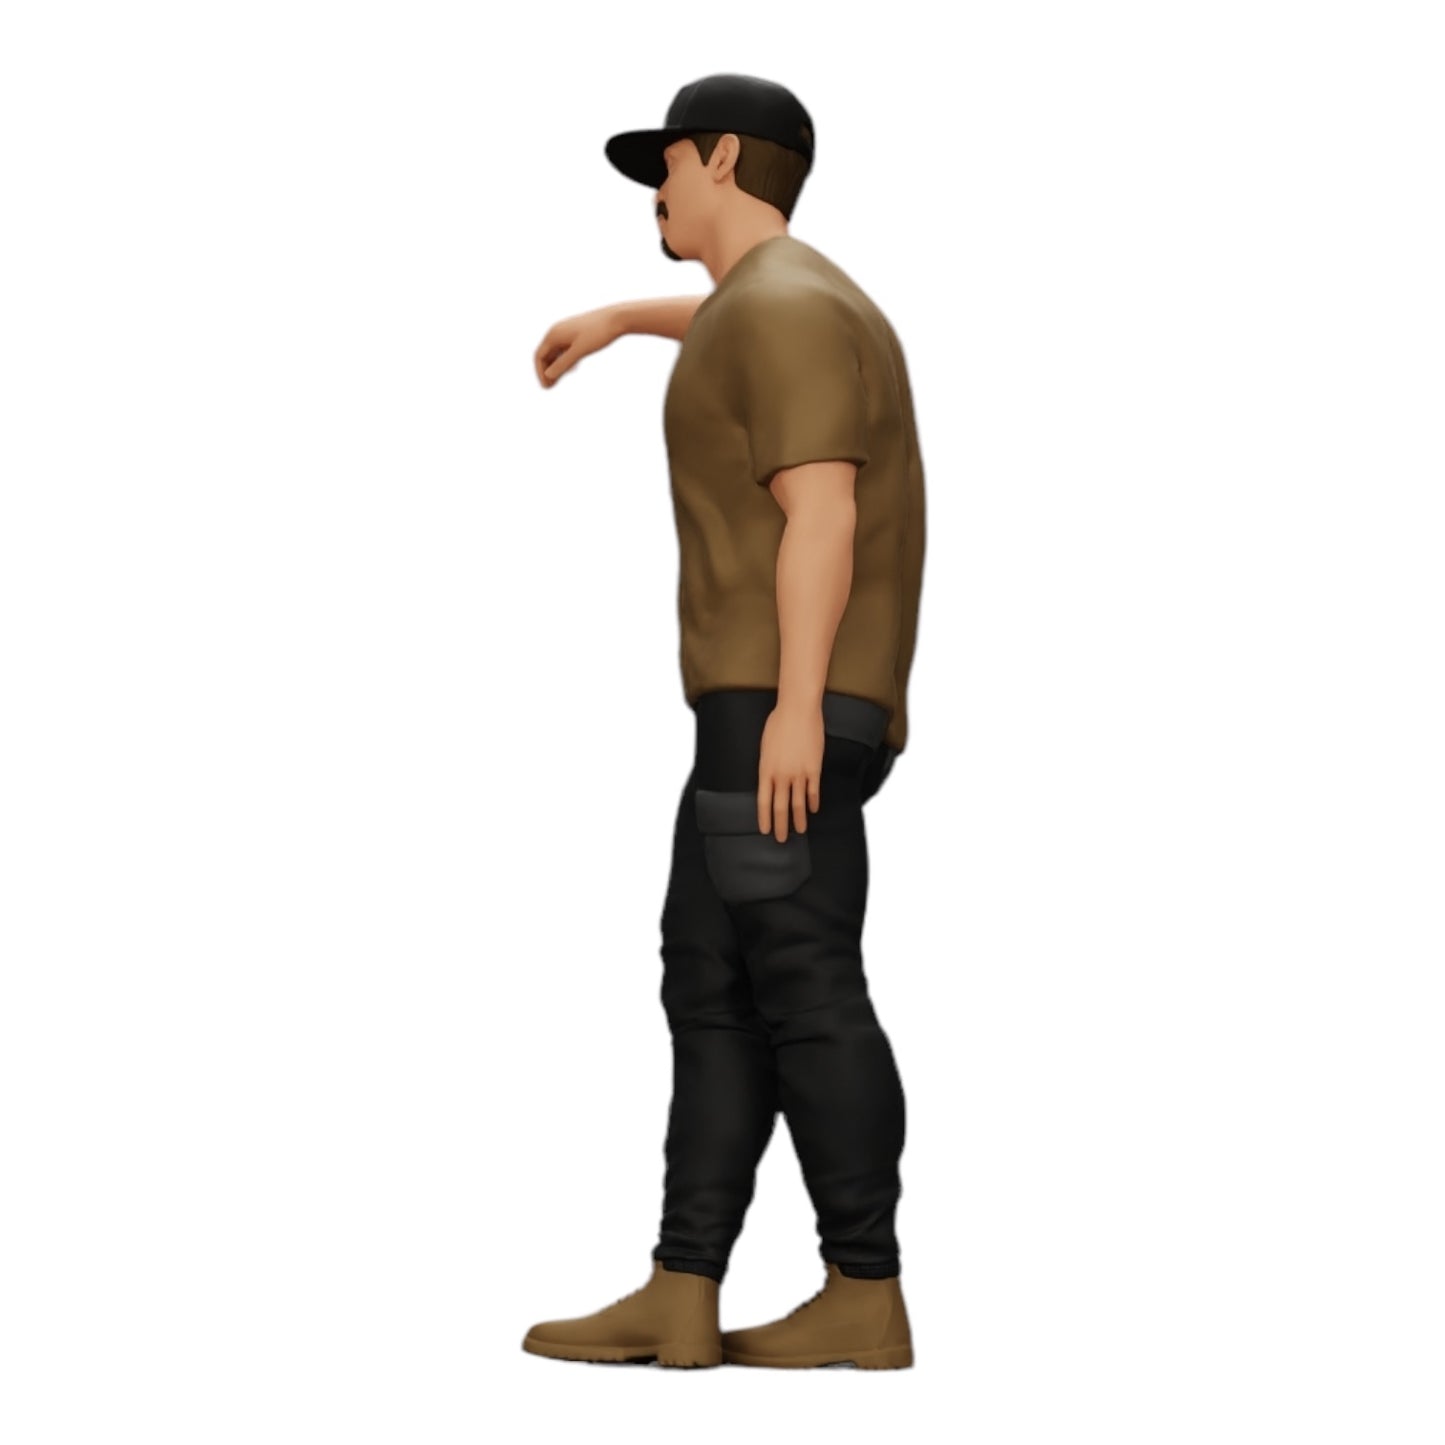 Diorama Modellbau Produktfoto 0: Gangster mit Mütze lehnt an Mauer (Ref Nr. A23)